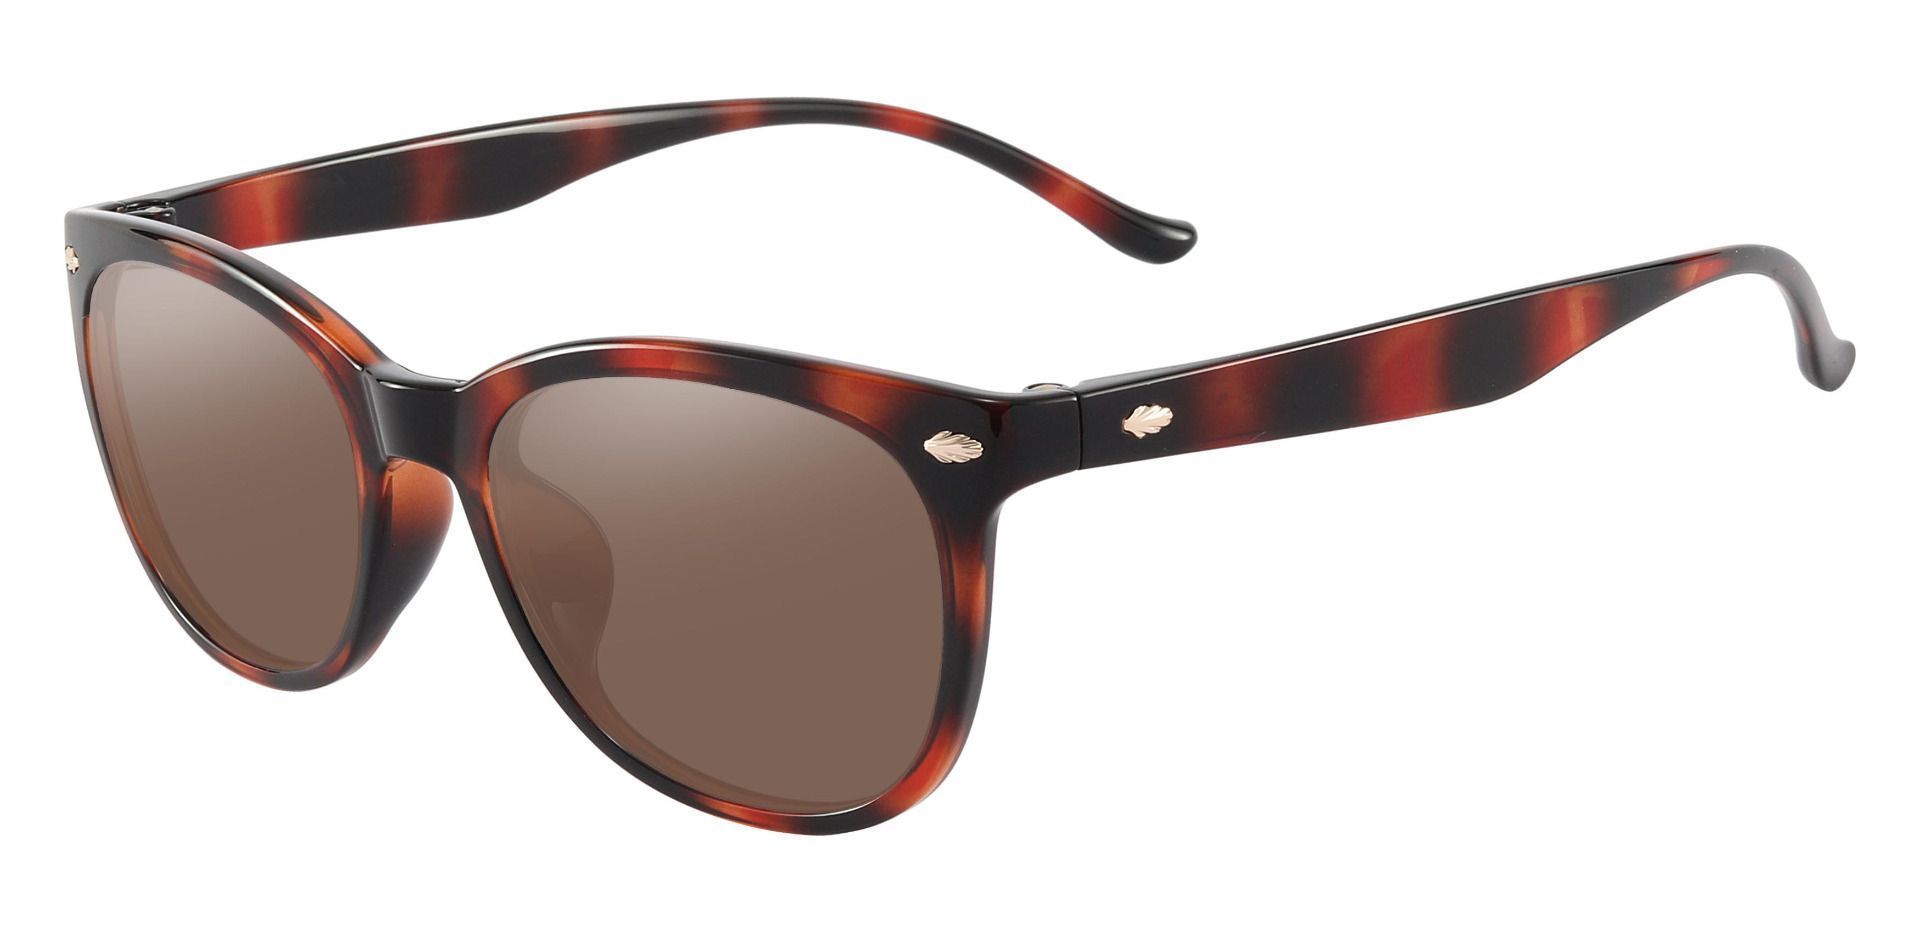 Pavilion Square Progressive Sunglasses - Tortoise Frame With Brown Lenses